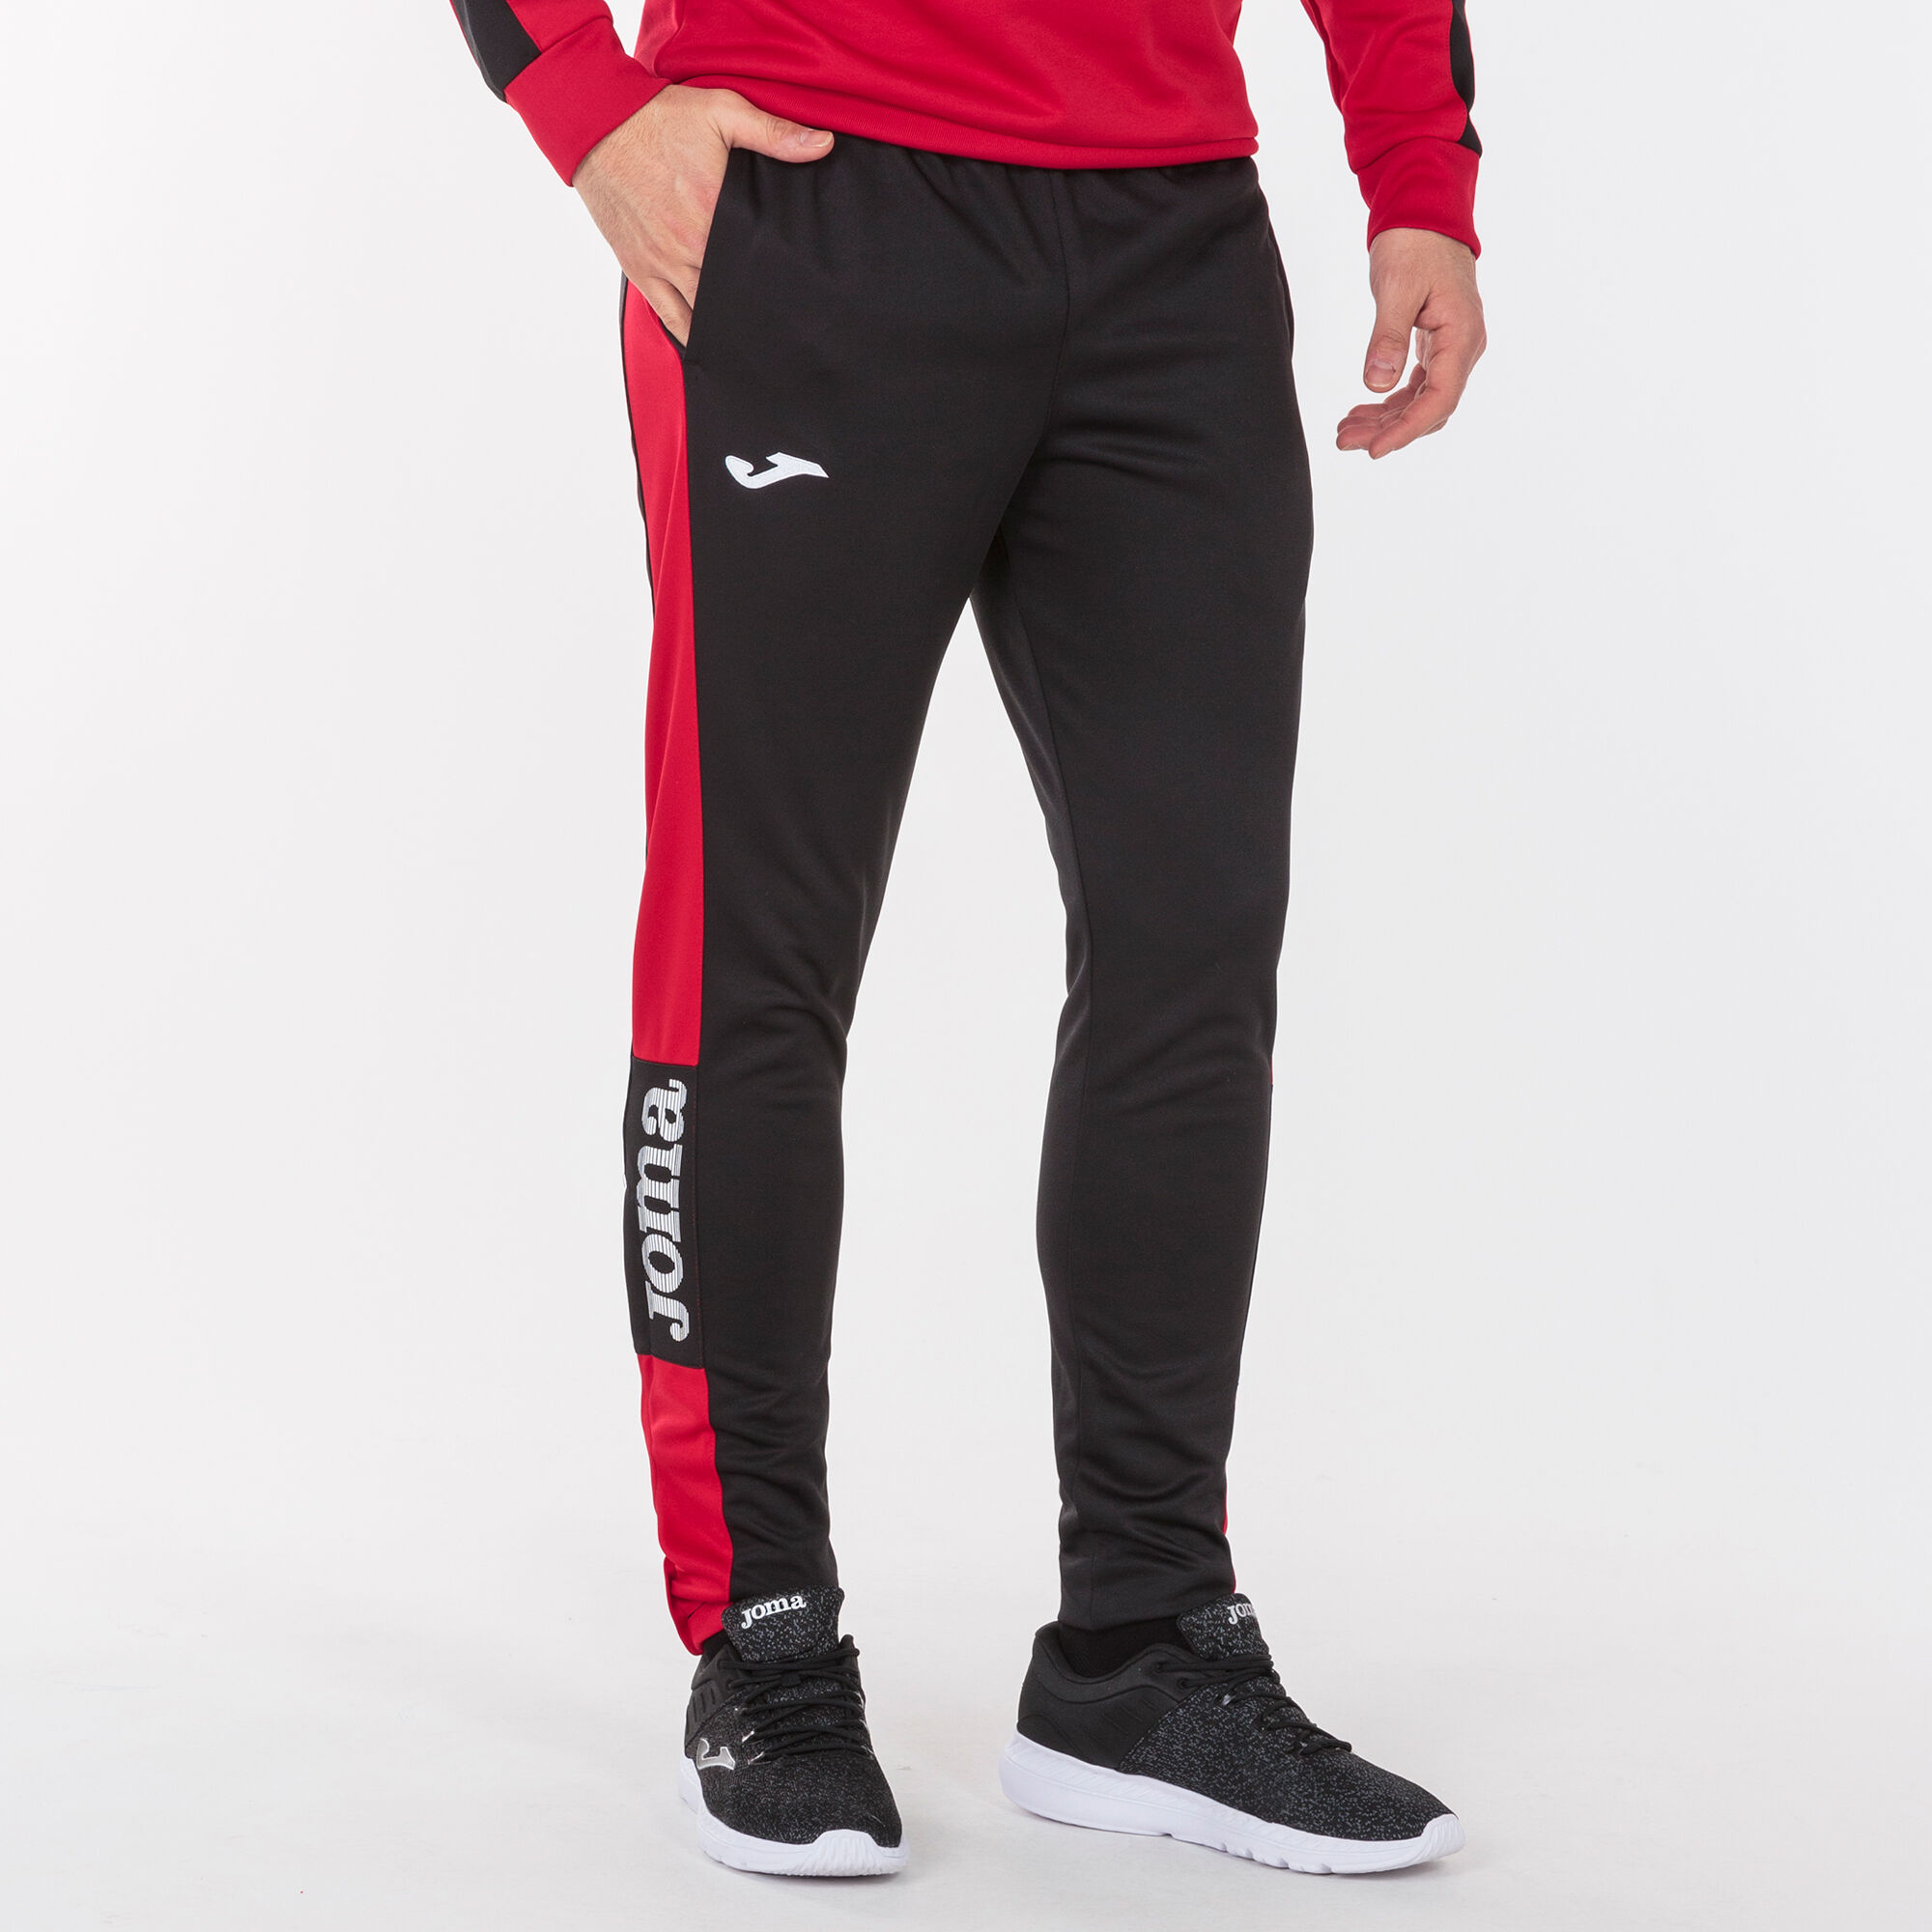 Pantalón largo hombre Championship IV negro rojo